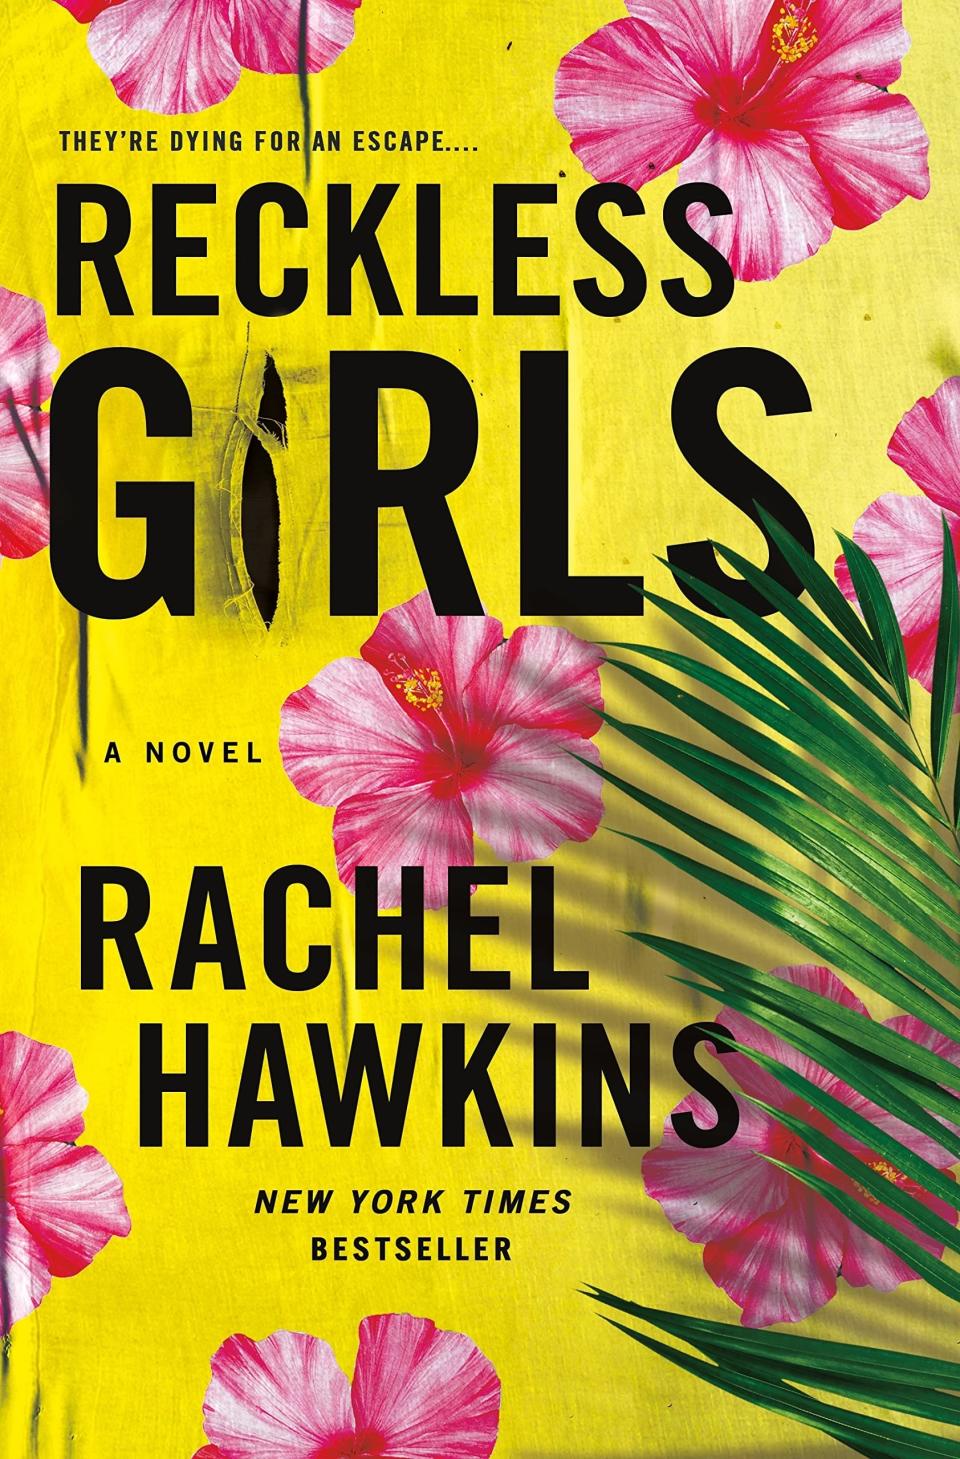 The cover of "Reckless Girls" Rachel Hawkins